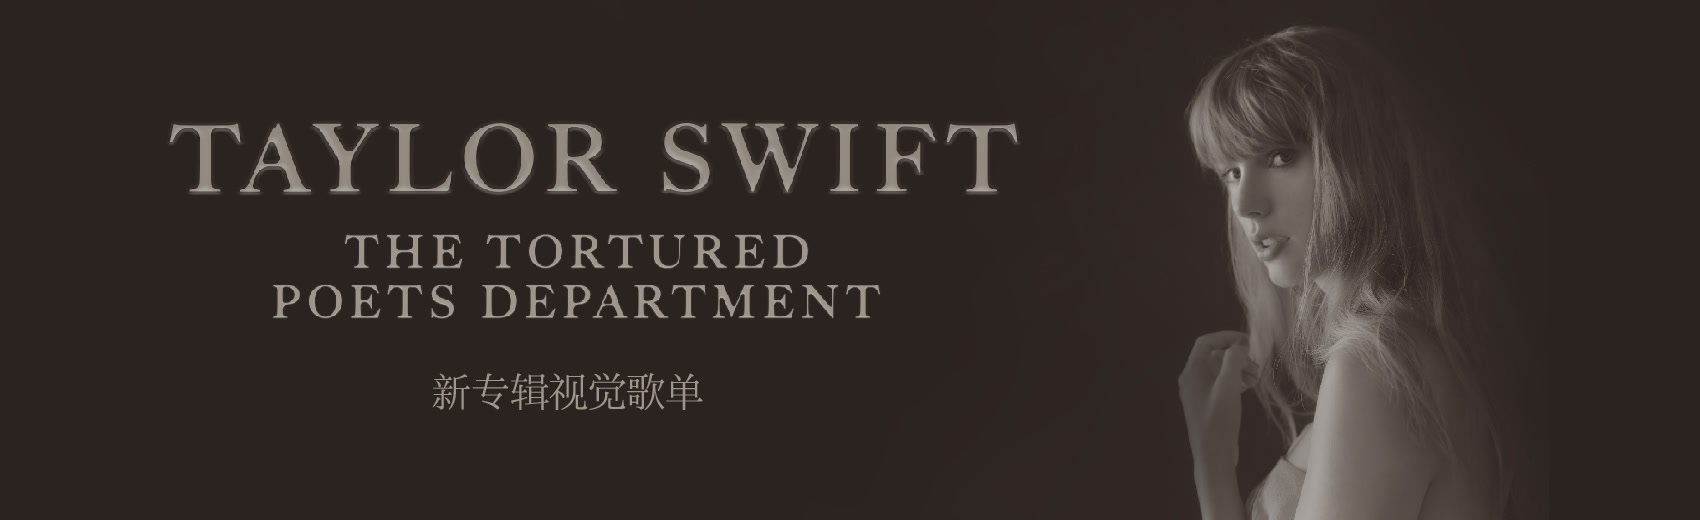 Taylor Swift新专辑